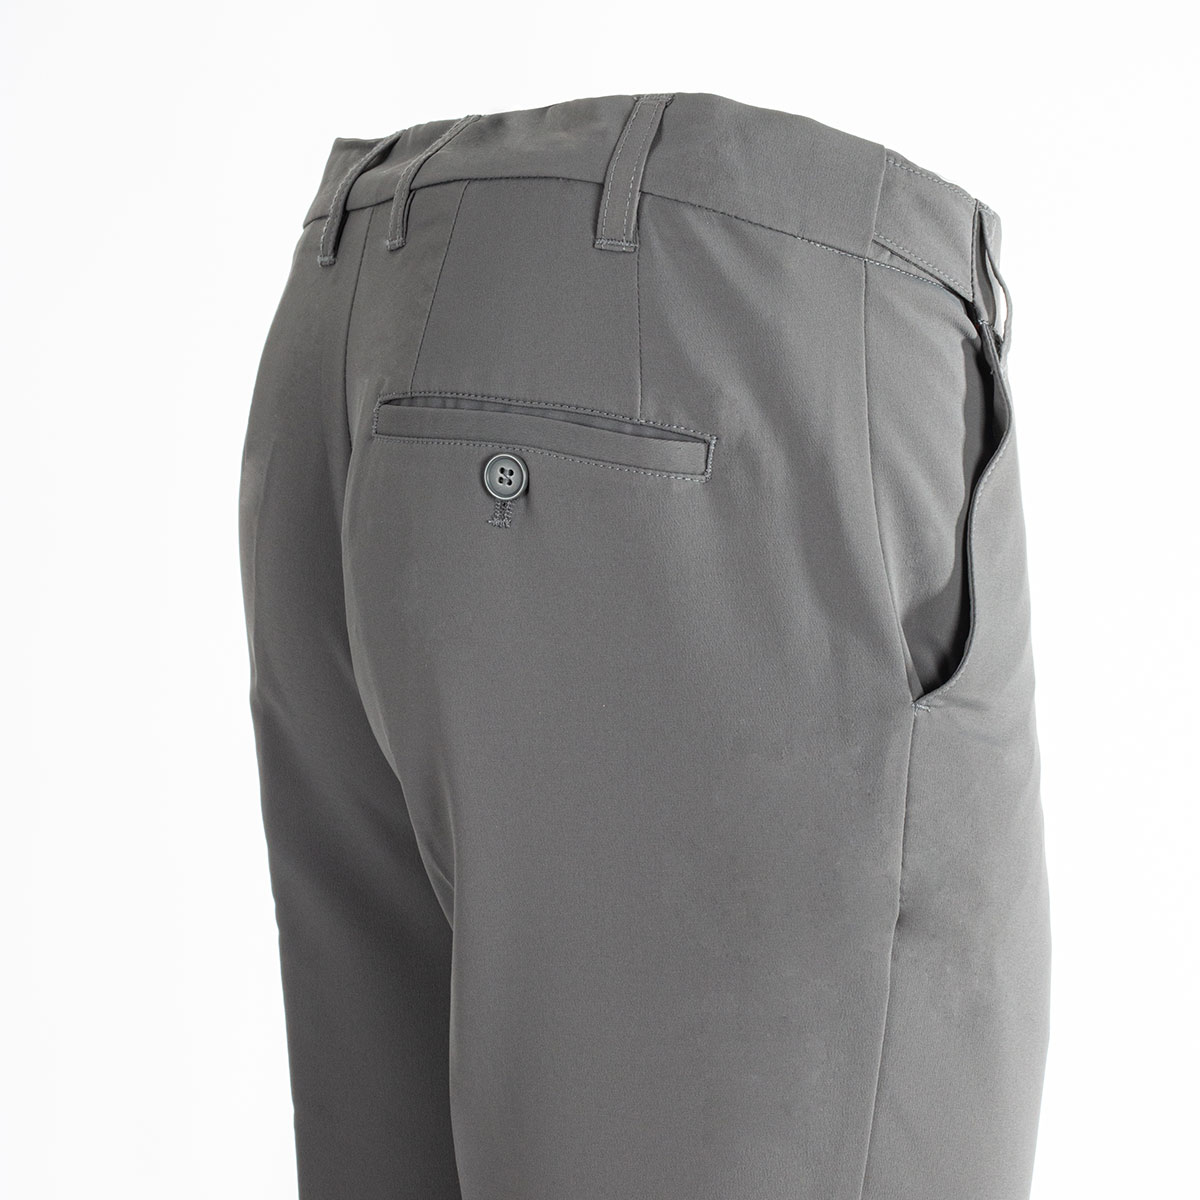 Benross Men's Tech Stretch Golf Trousers from american golf